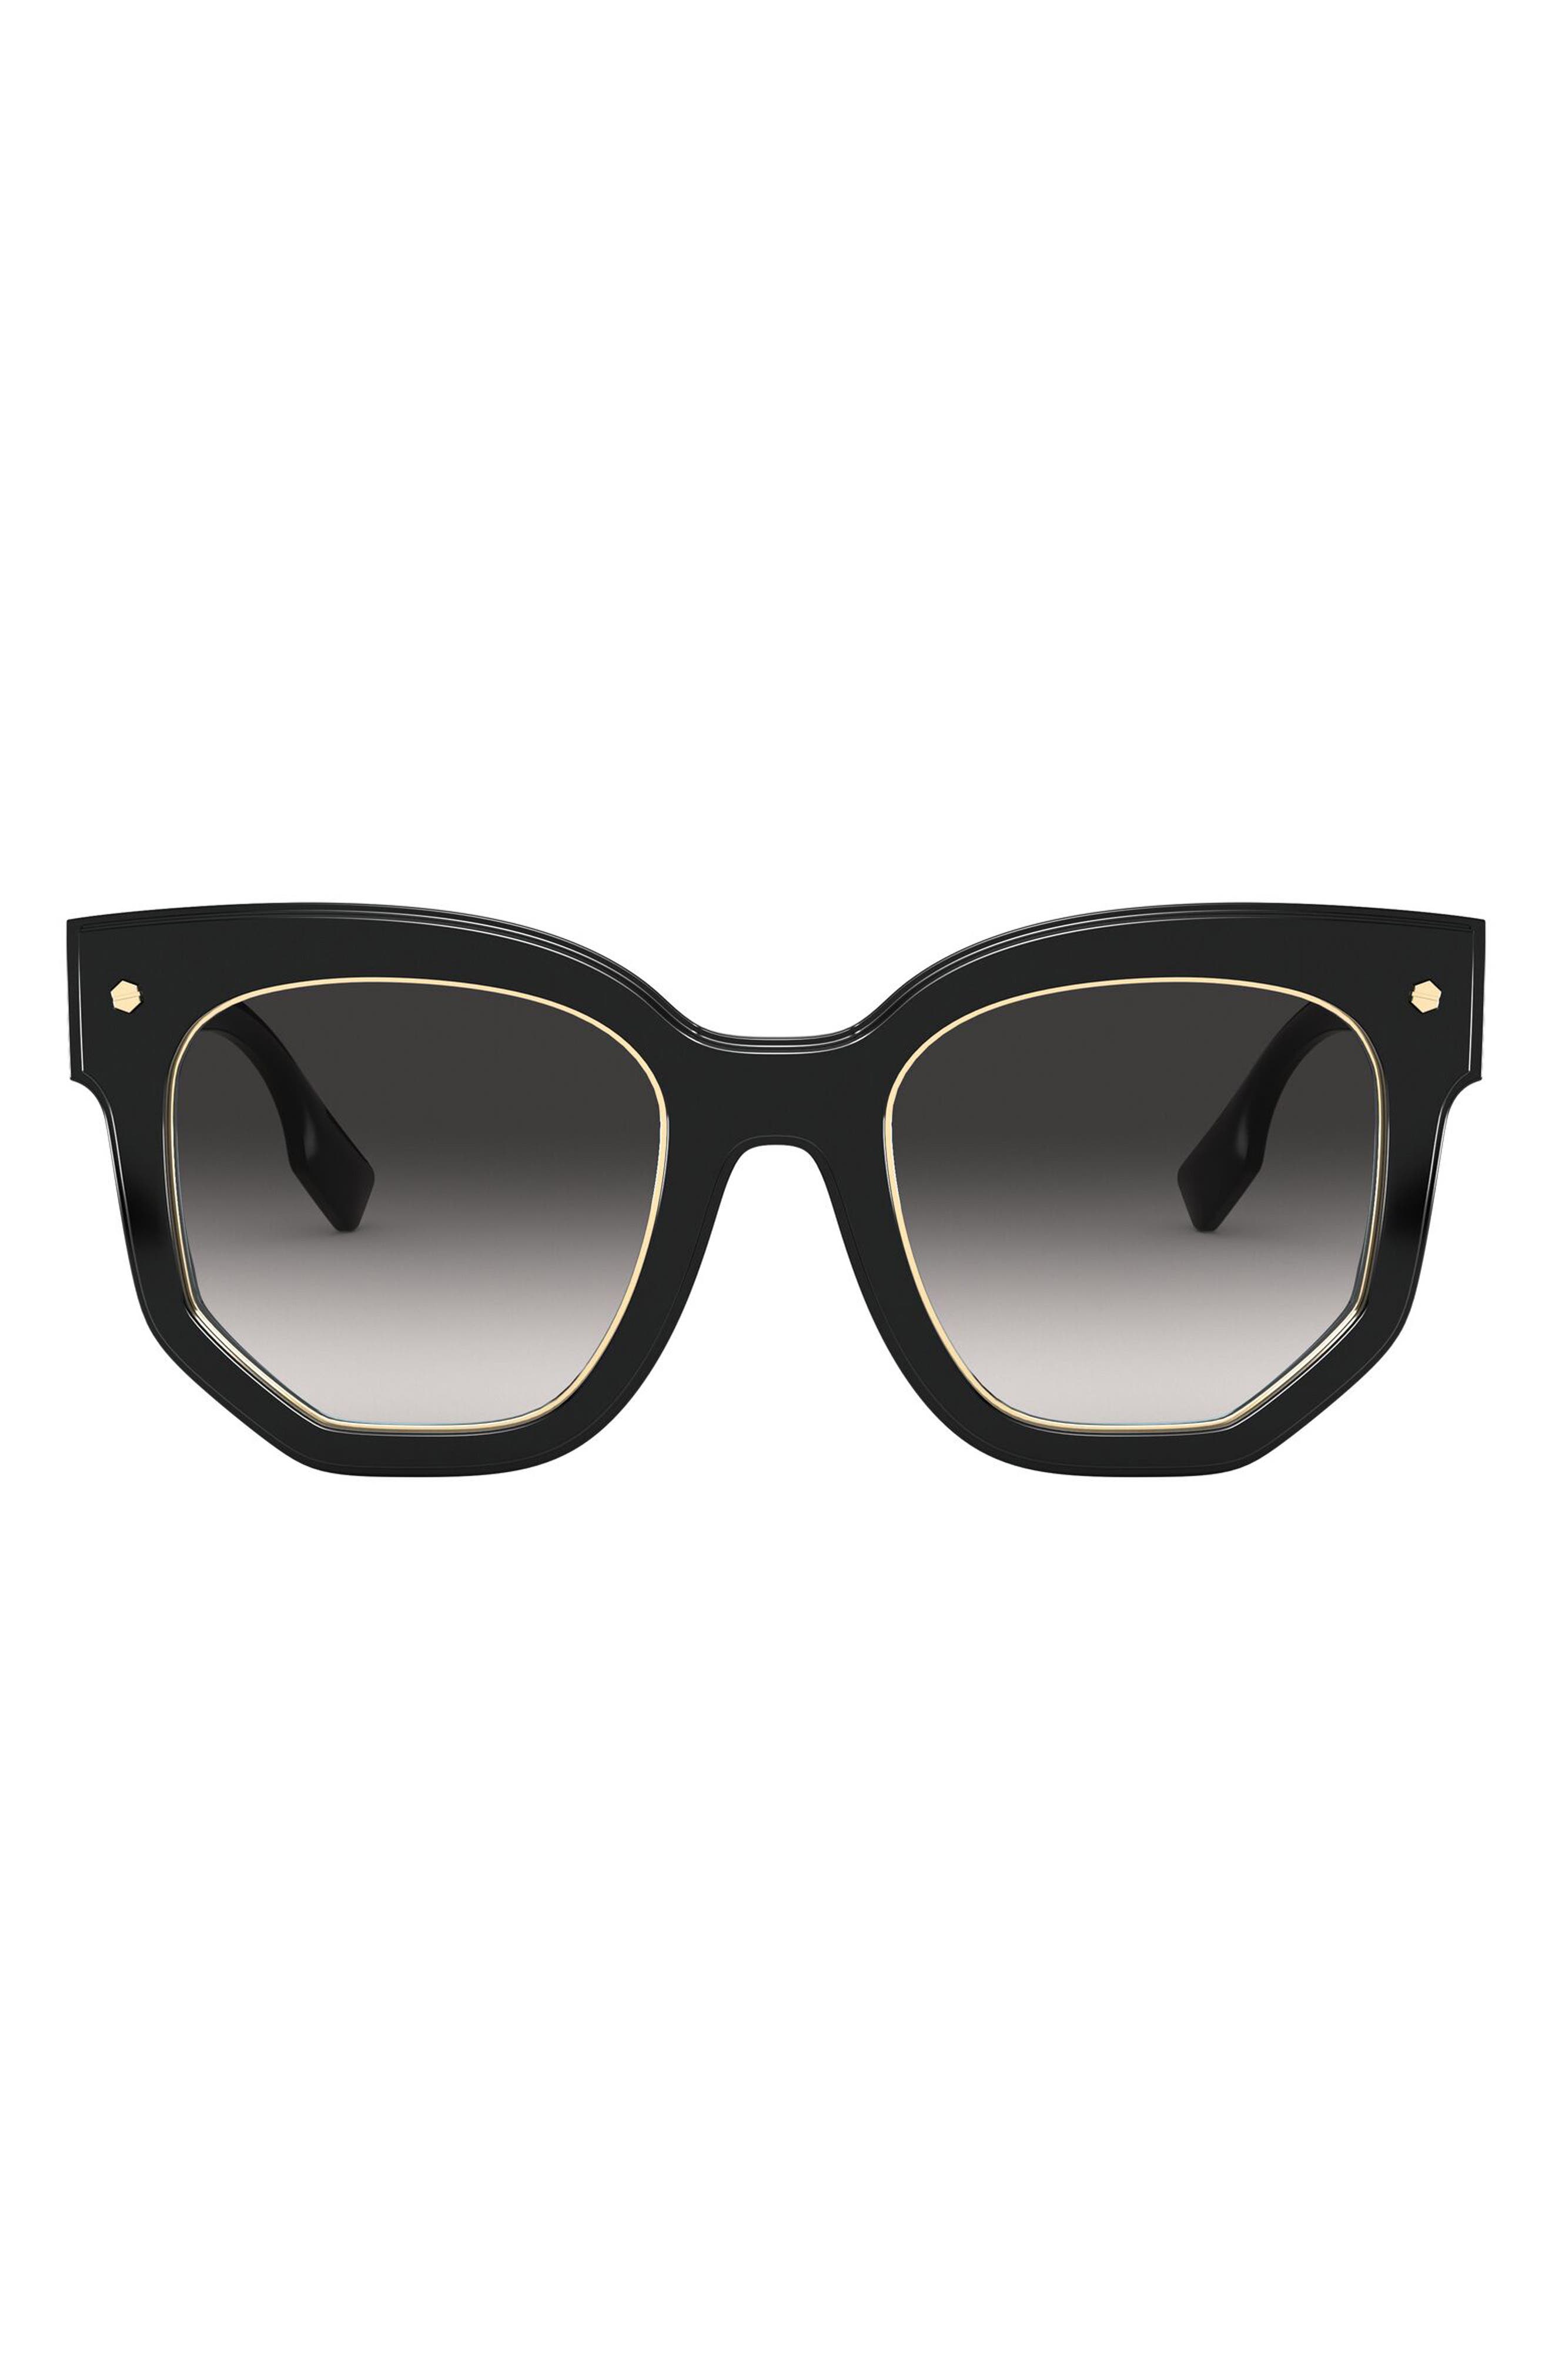 Kate Spade New York Women's Amaya Sunglasses, Black White Gray Gradien